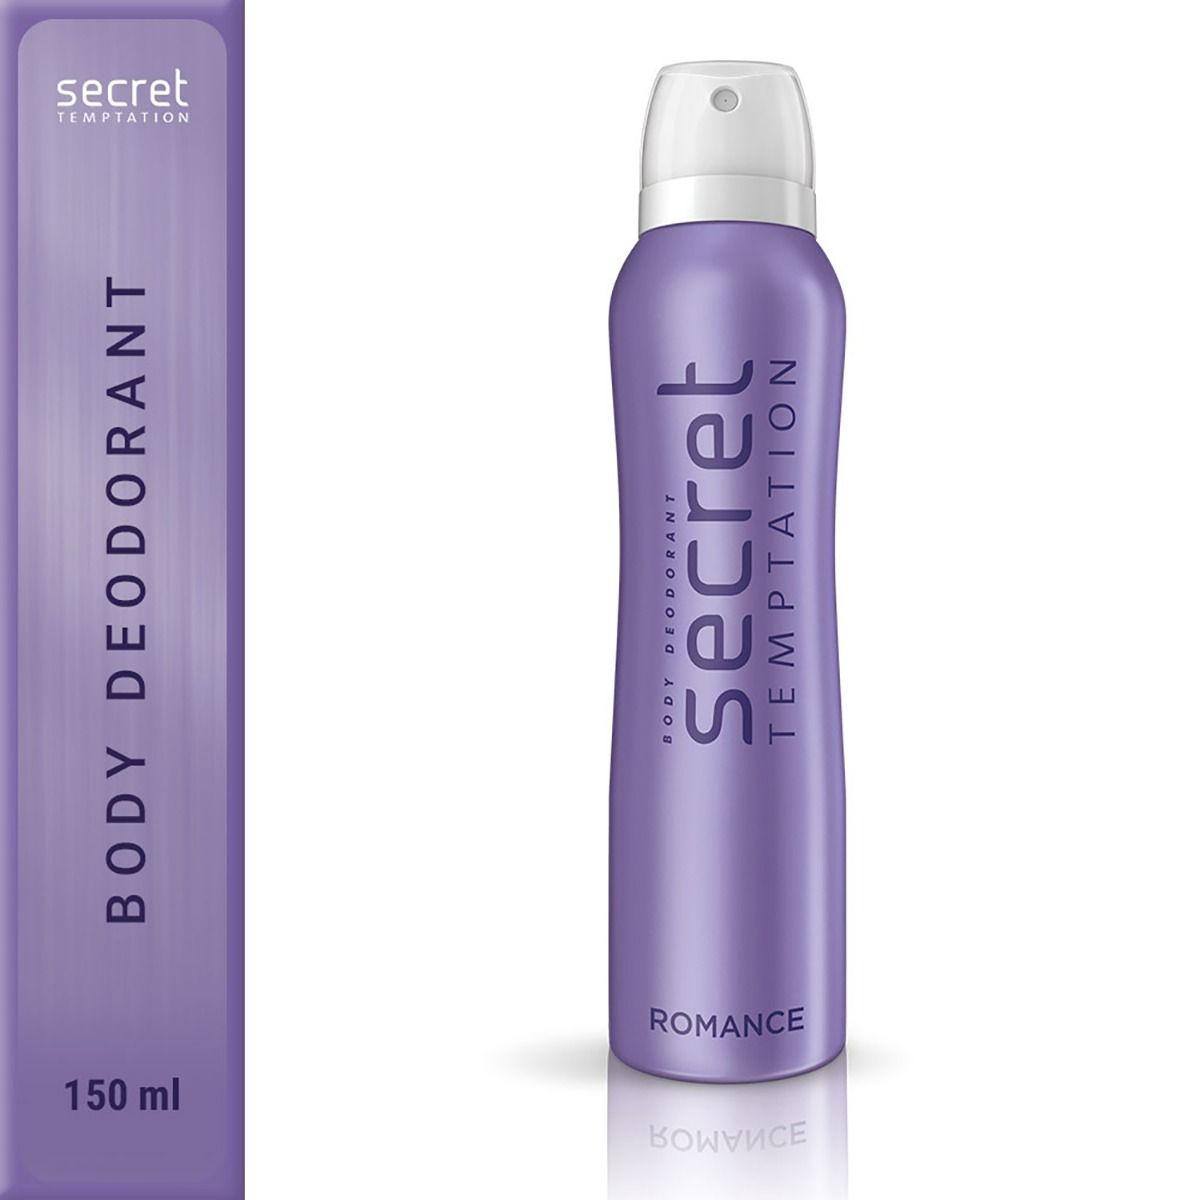 Secret Temptation Romance Body Deodorant, 150 ml, Pack of 1 